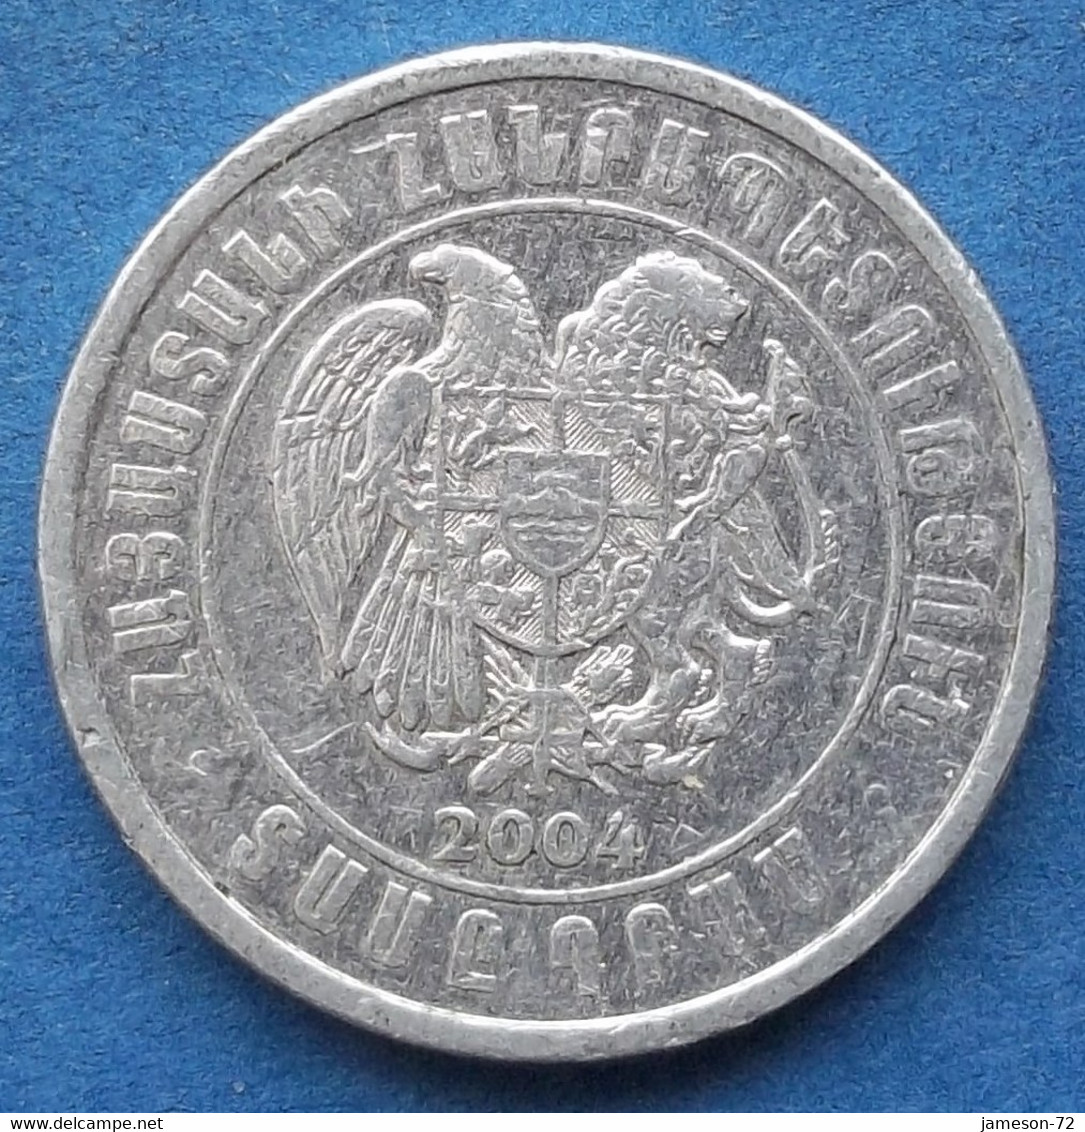 ARMENIA - 10 Dram 2004 KM# 112 Independent Republic (1991) - Edelweiss Coins - Armenien